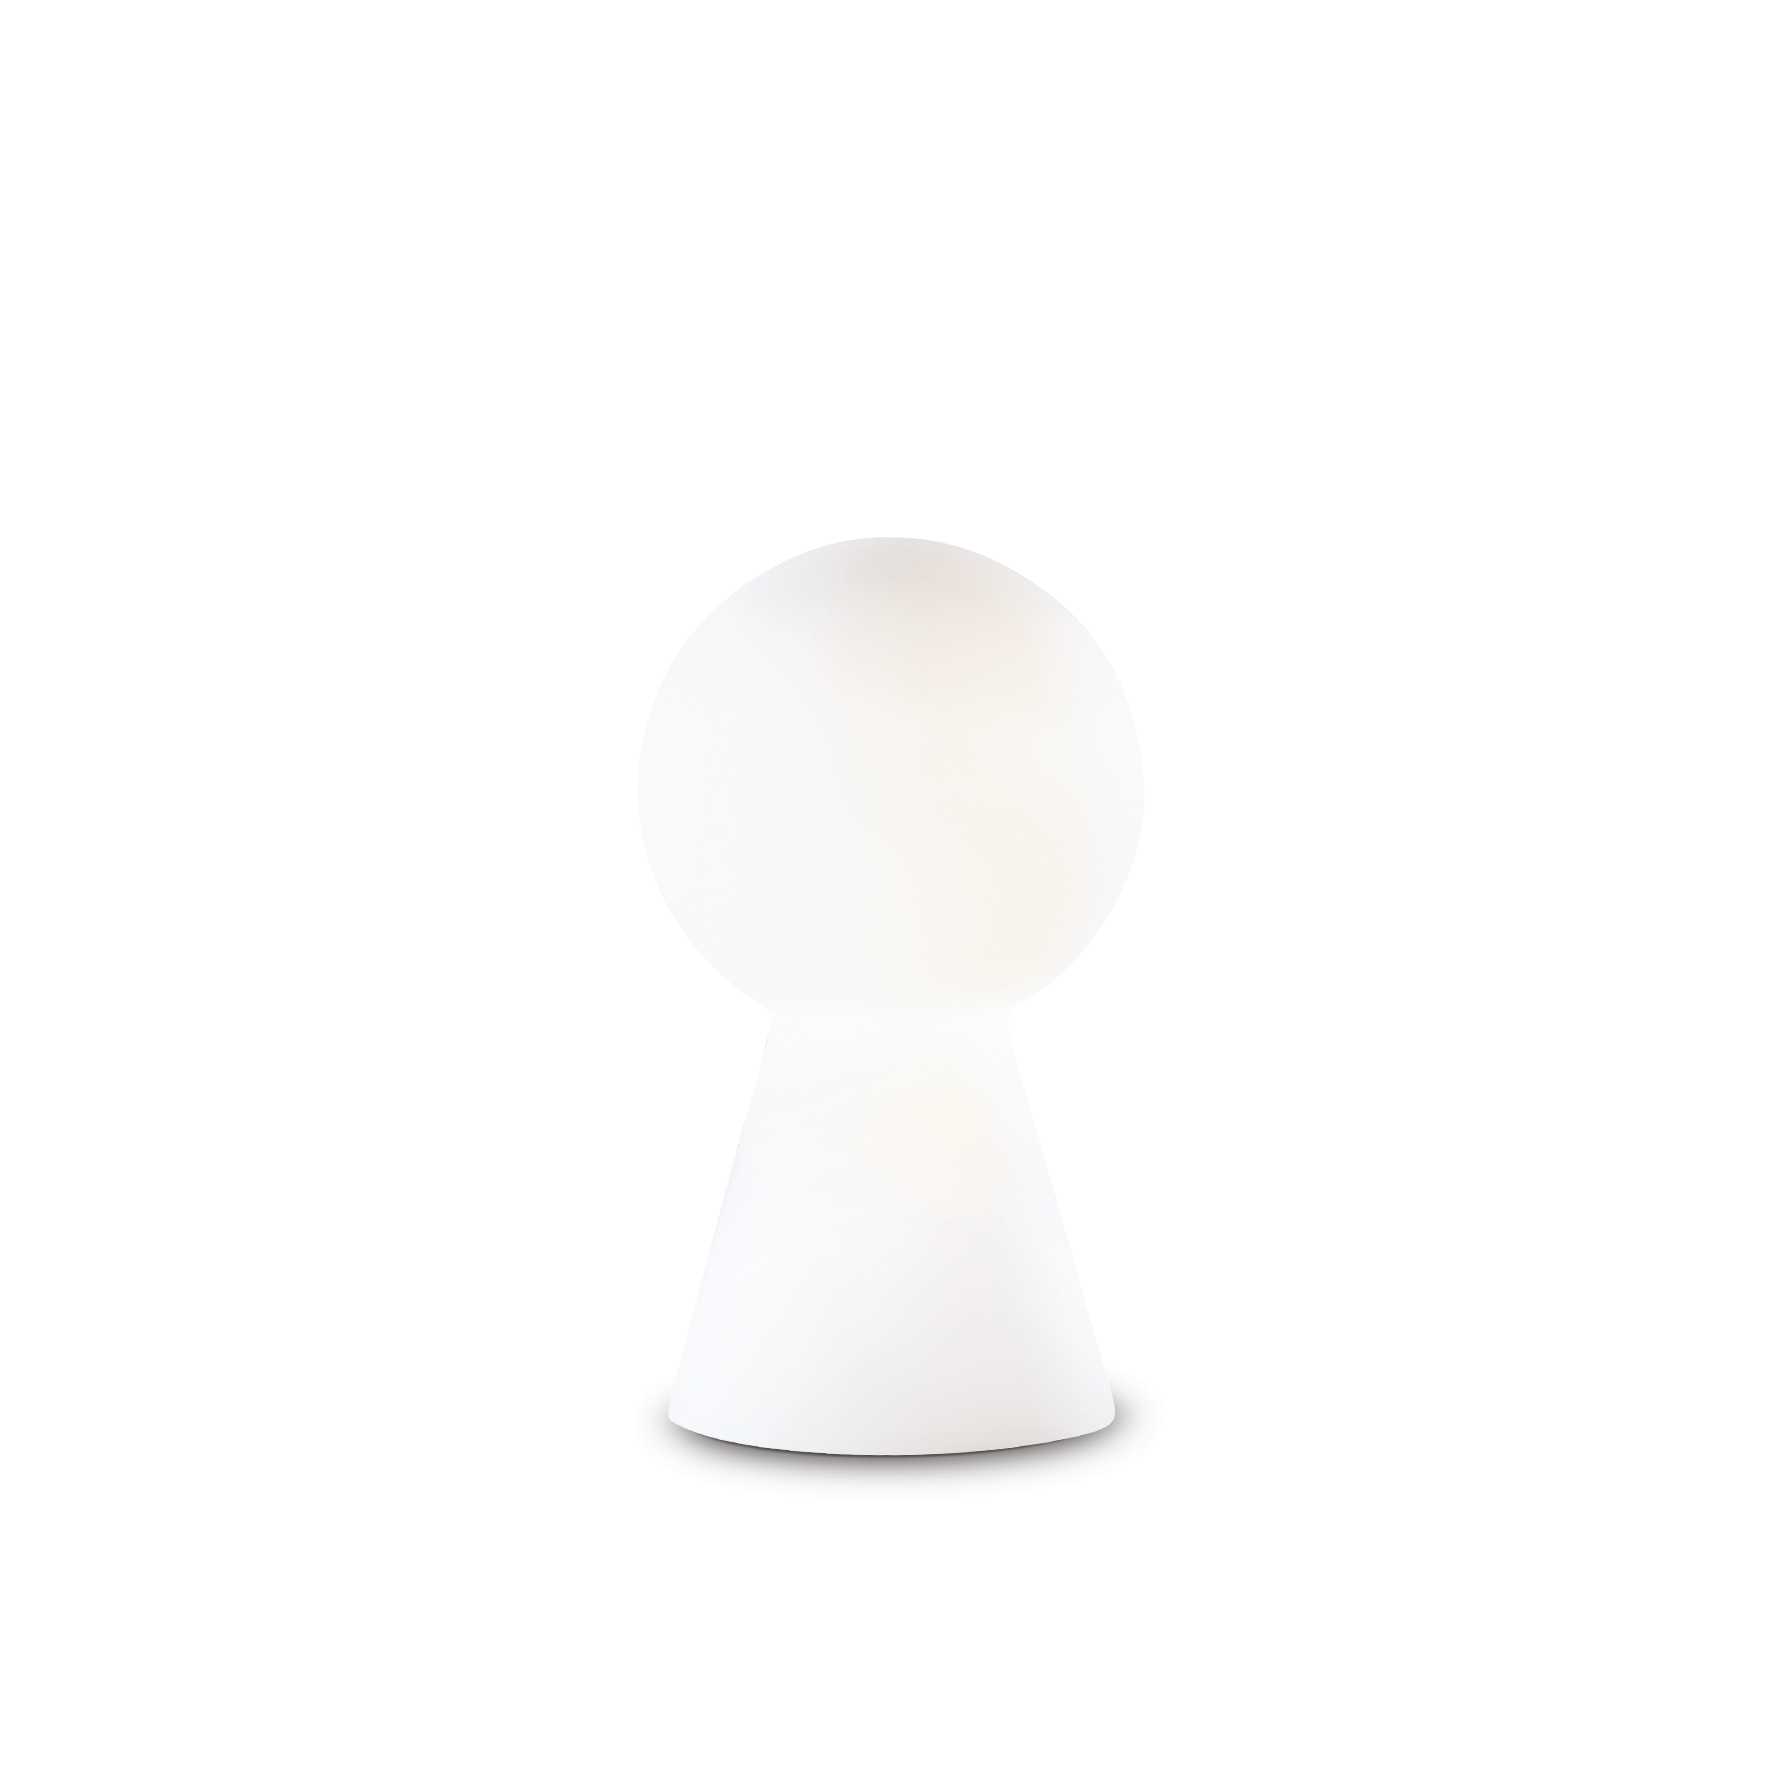 AD hotelska oprema Stolna lampa Birillo tl1( mala)- Bijele boje slika proizvoda